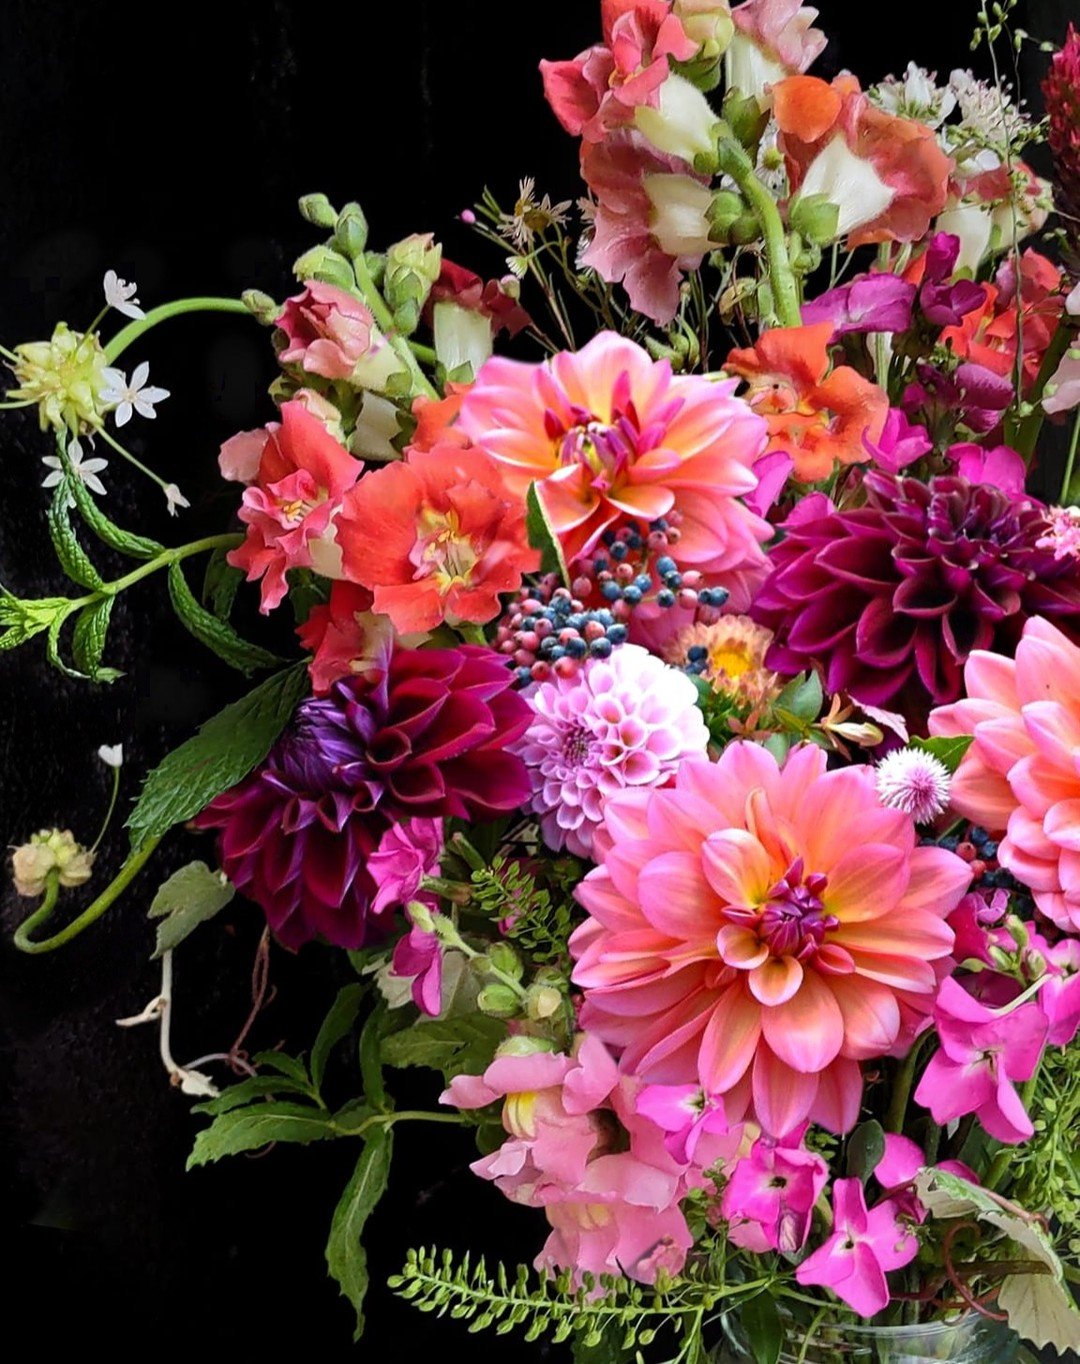 Spring Bridal Bouquet Inspiration. 
#bridalbouquetideas #springbouquet